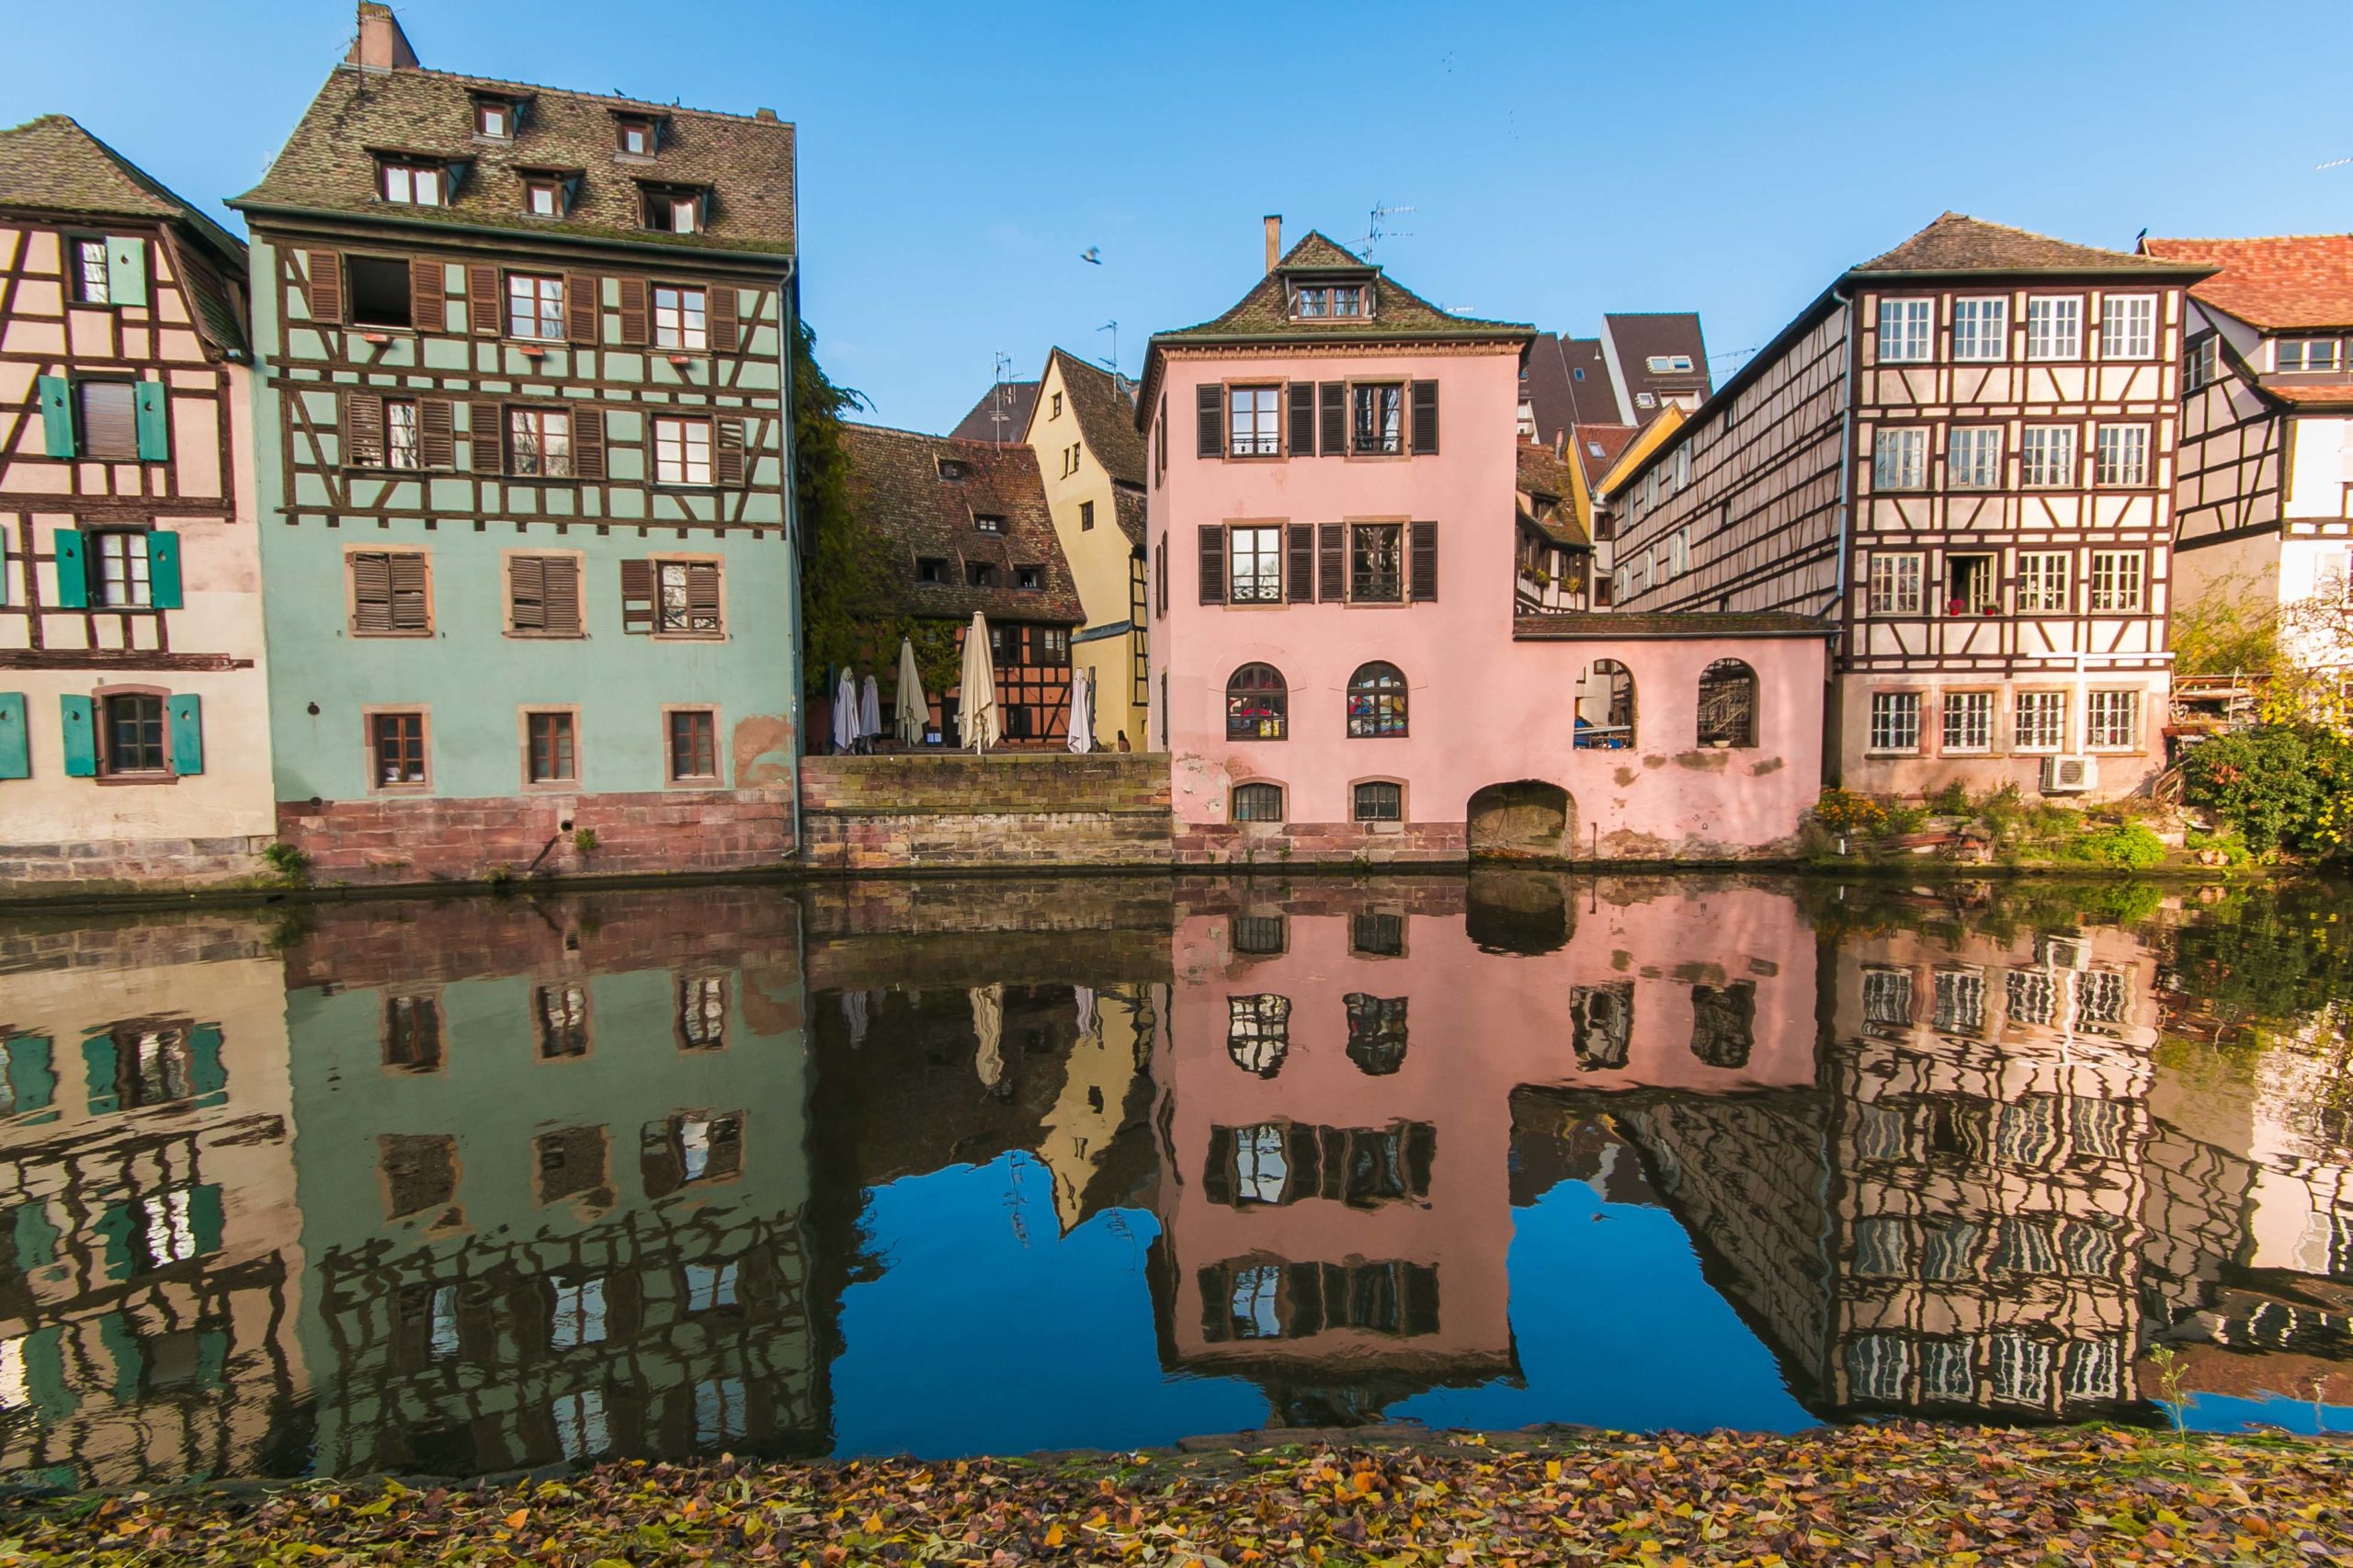 L'automne en Alsace à Strasbourg. Photo: @DesignYourUniverse via Twenty20